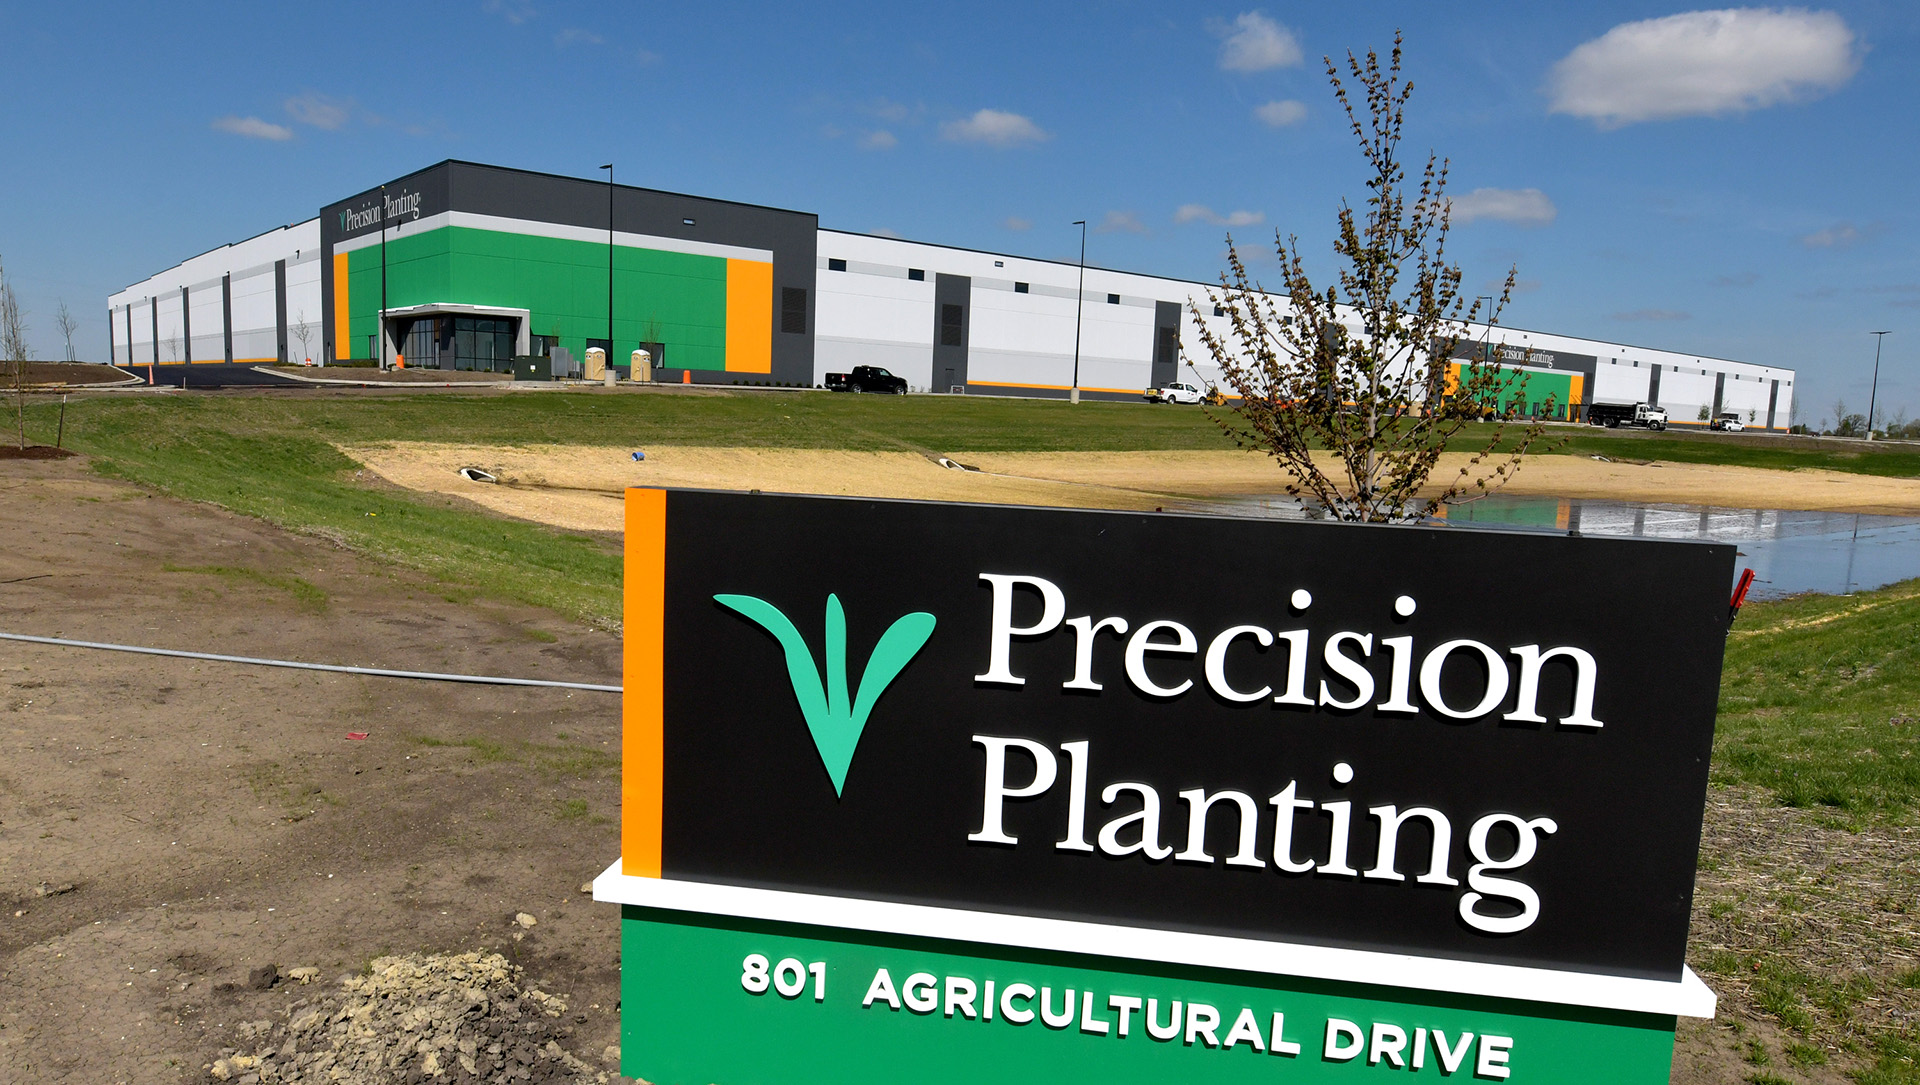 The new Precision Planting building under construction in Morton